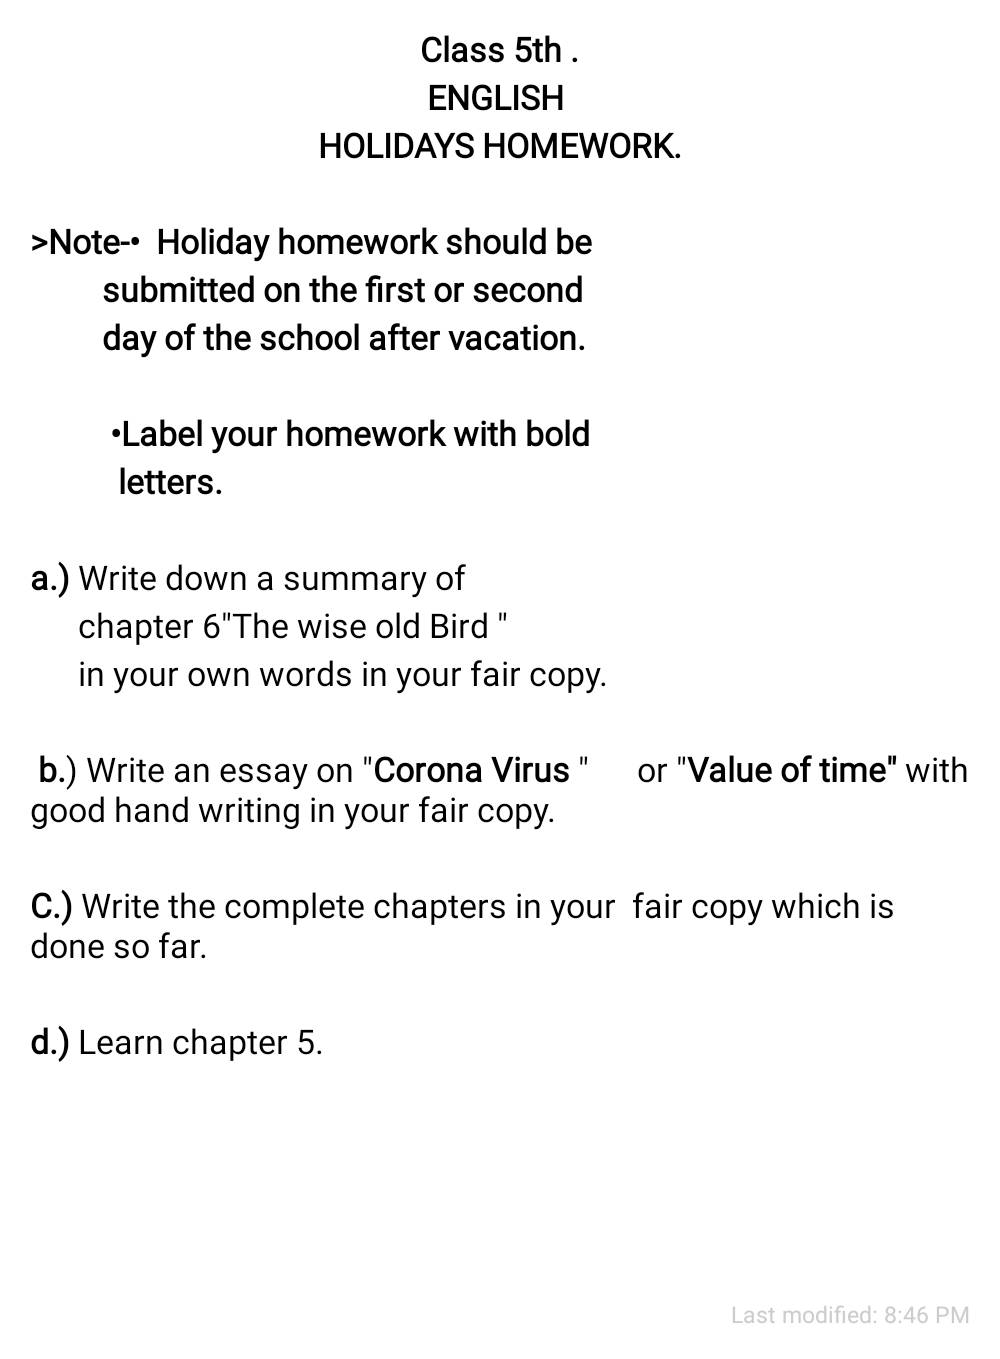 Holidays Homework English Notes Teachmint